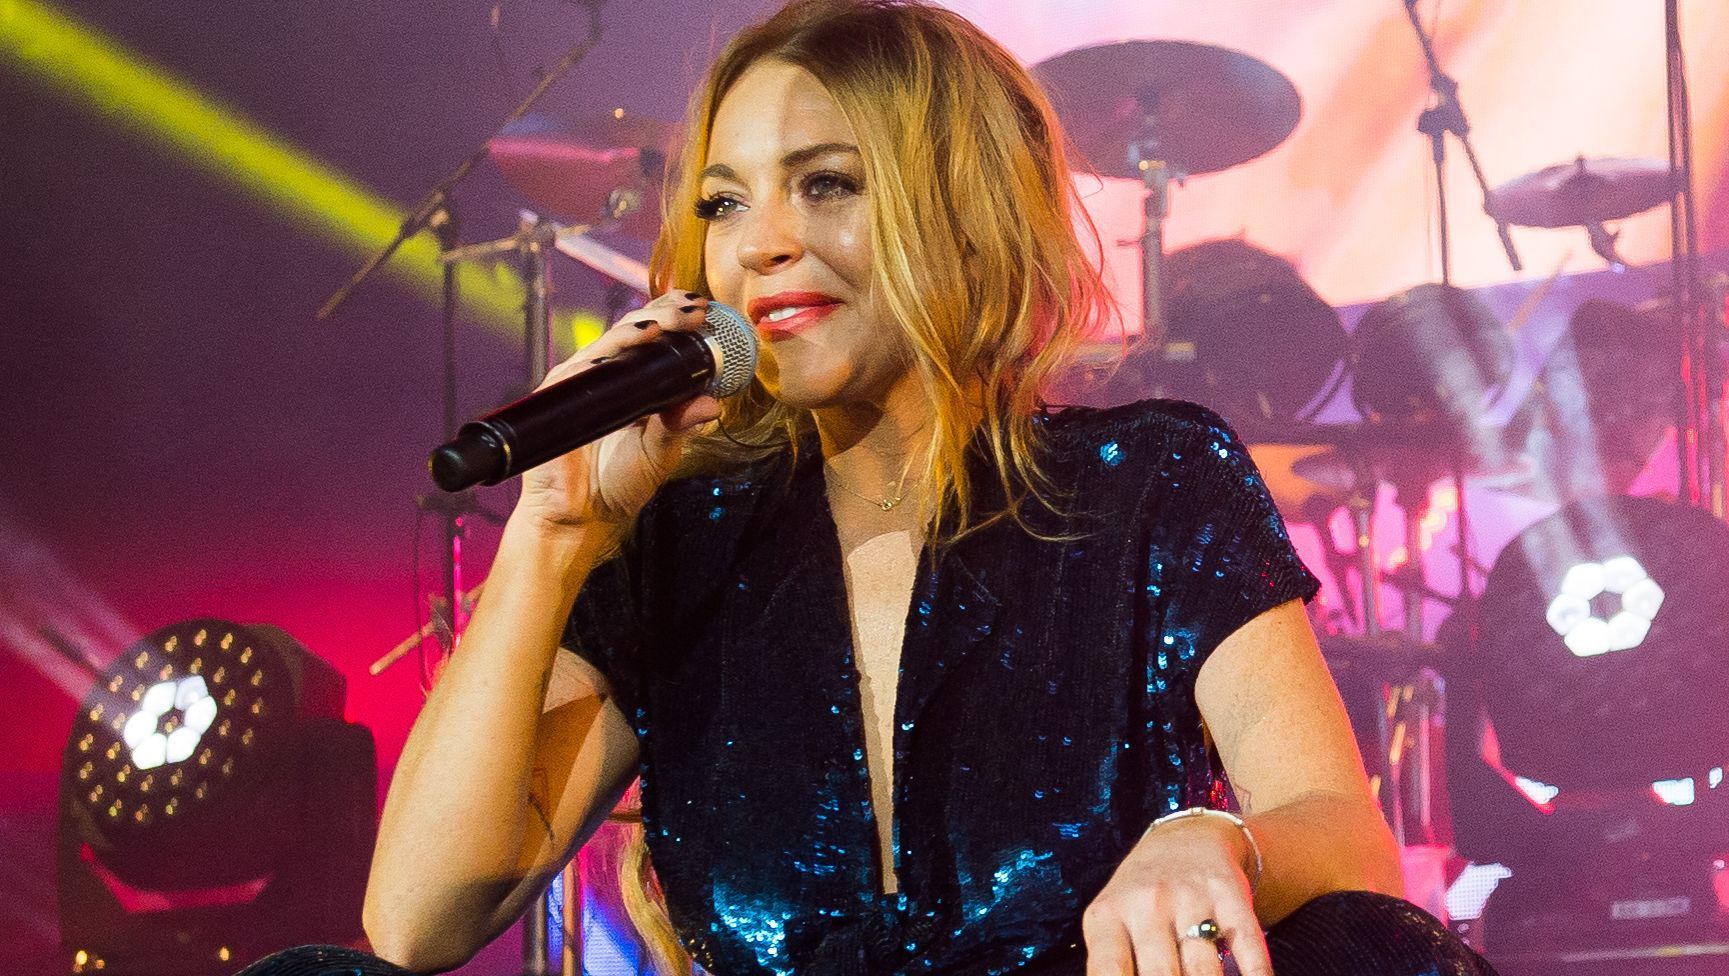 Lindsay Lohan Drops Music Video For New Song 'Xanax'